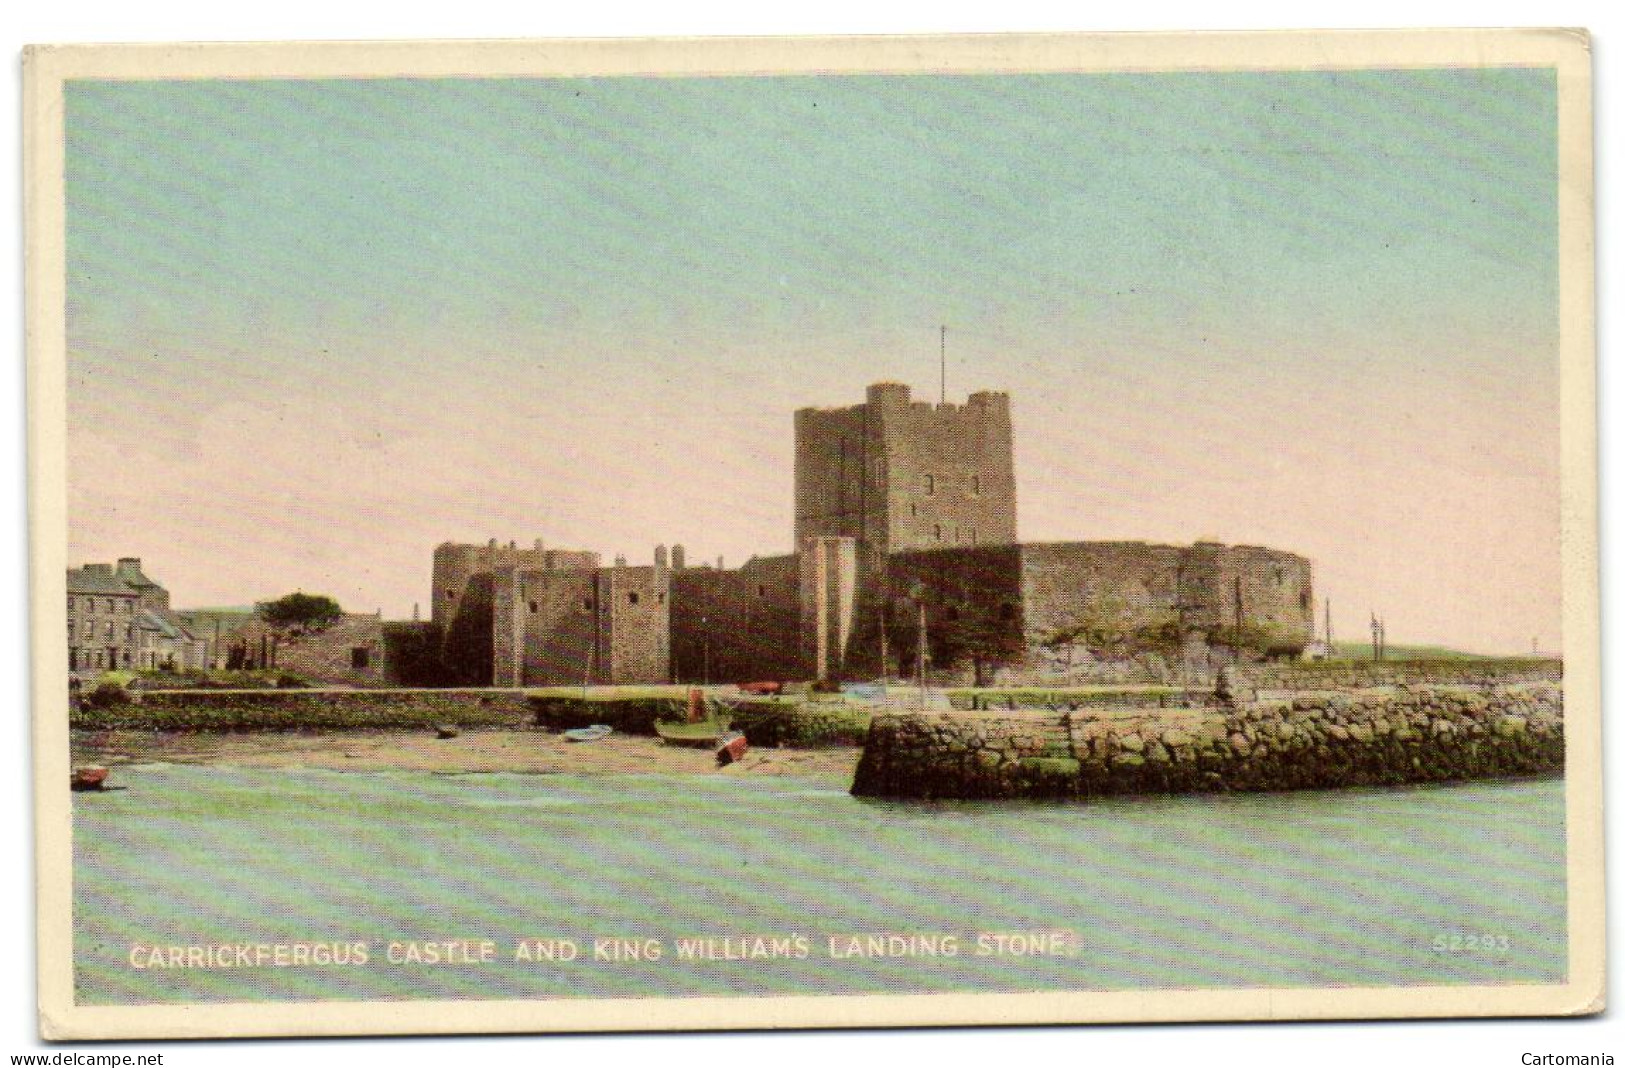 Carrickfergus Castle And King William's Landing Stone - Antrim